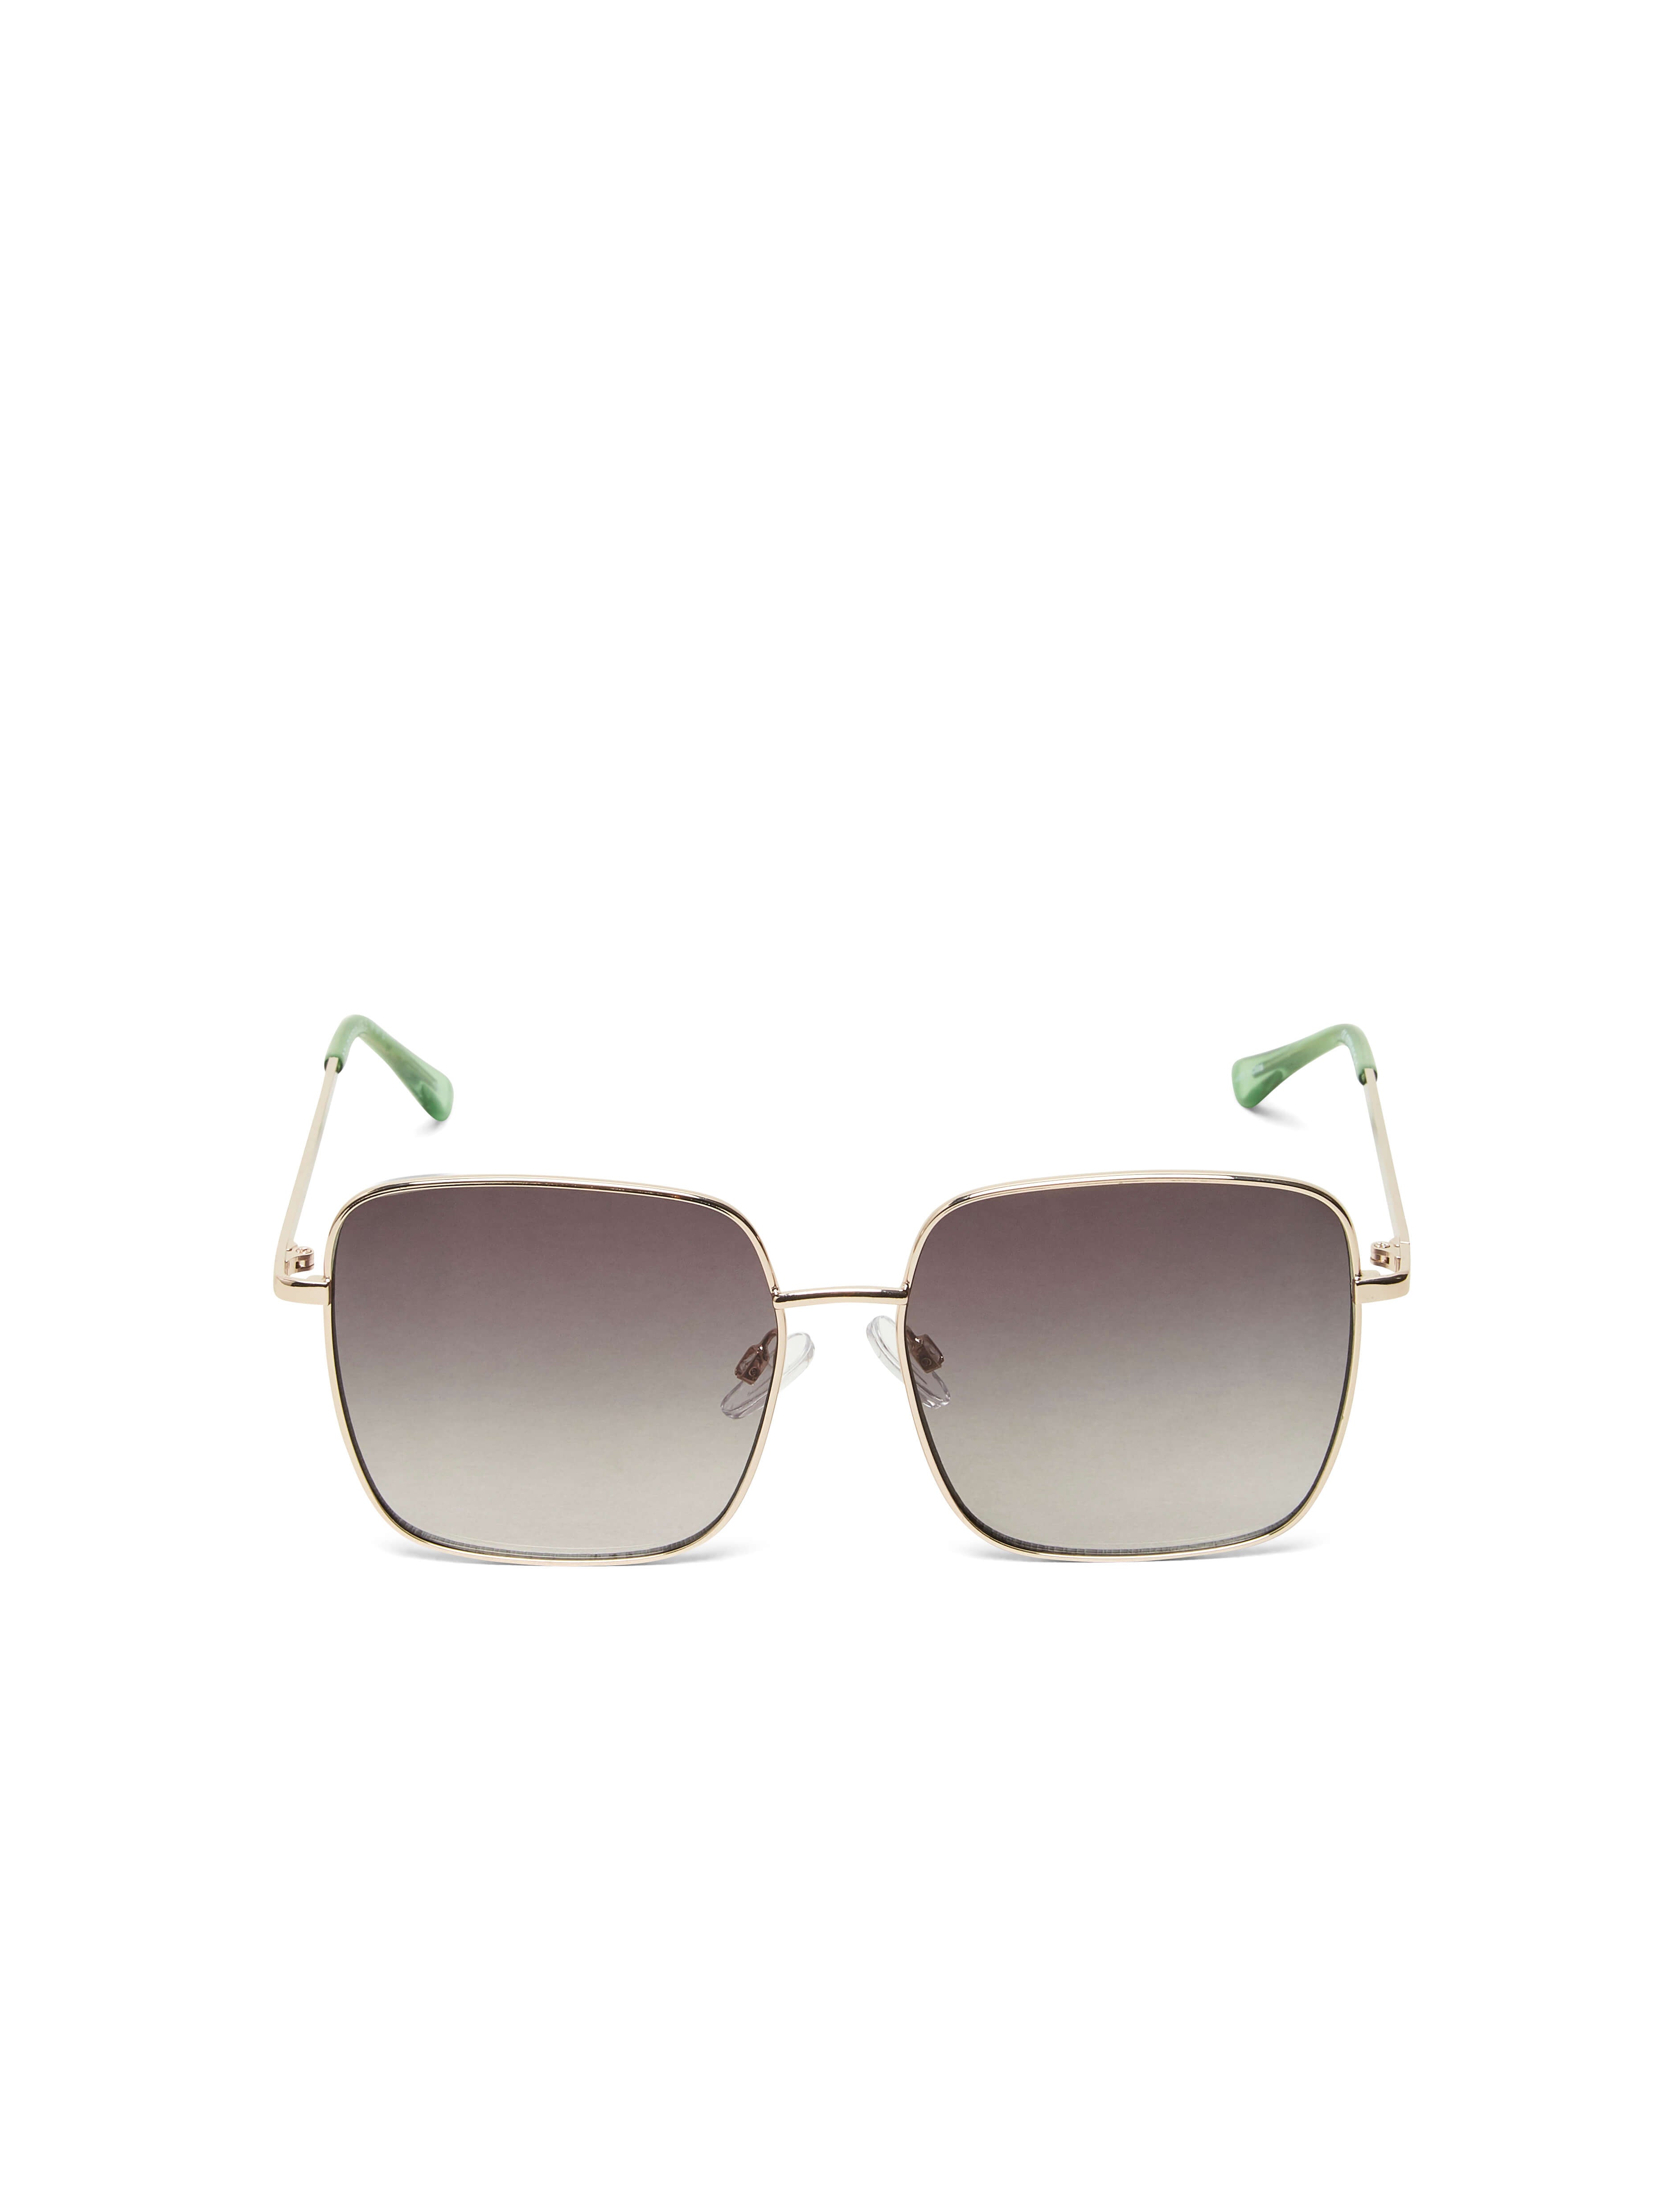 SLF Lovisa sunglasses in silver with square frame